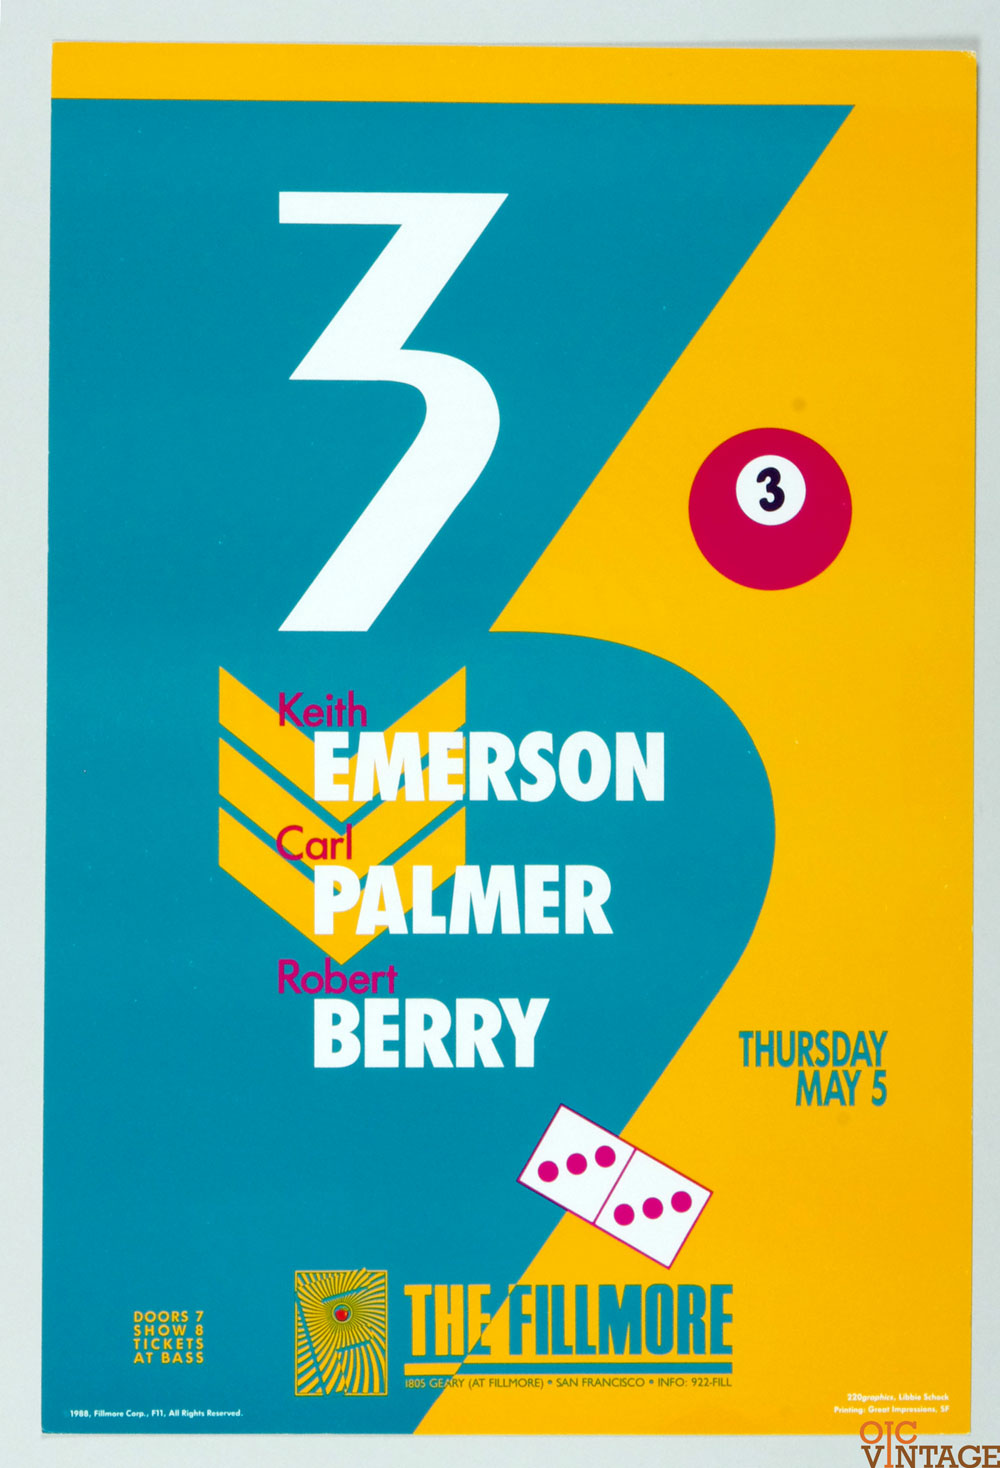 Emerson Berry & Palmer Poster 1988 May 5 New Fillmore San Francisco